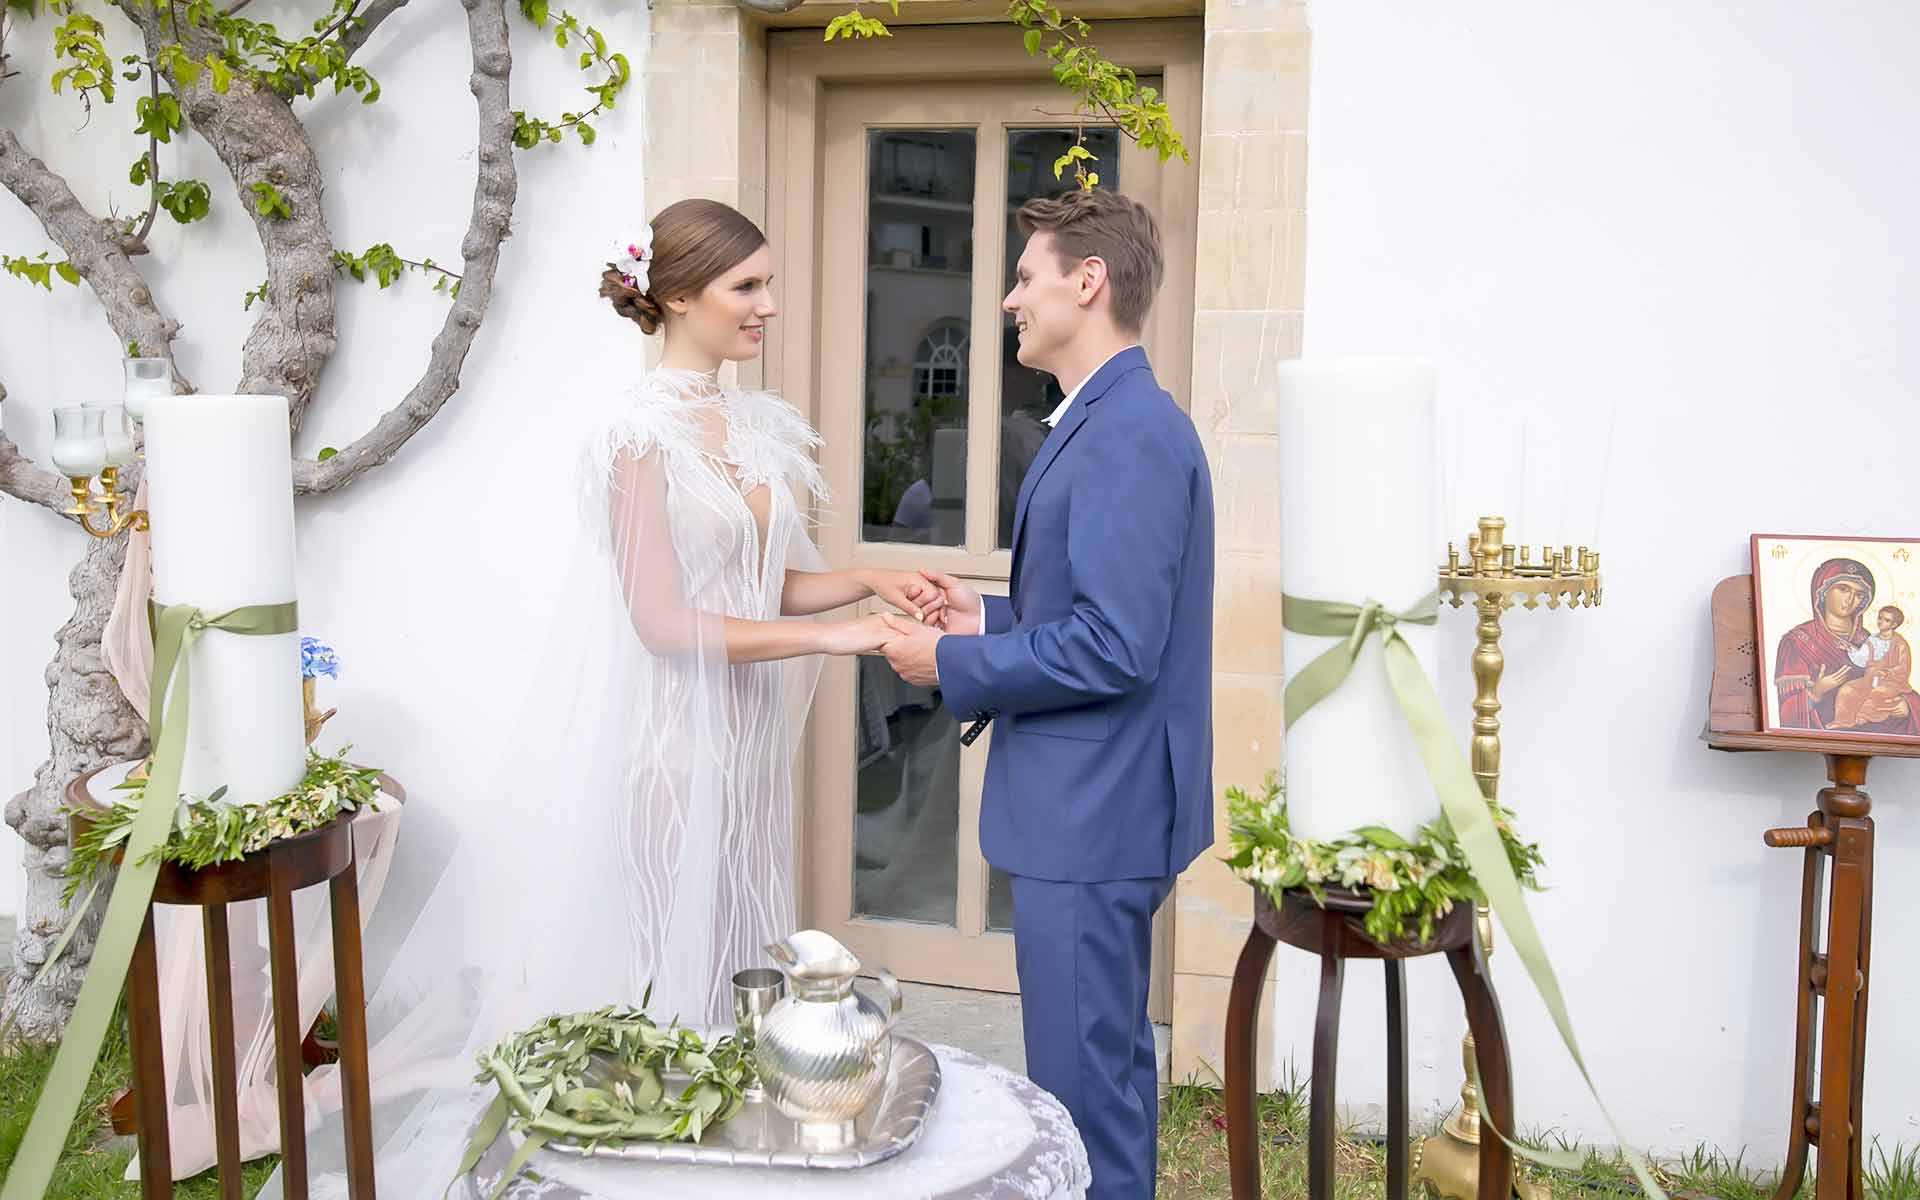 Rogdaki Events Trademark - Luxury Wedding & Event Planning Services in Greece, santorini